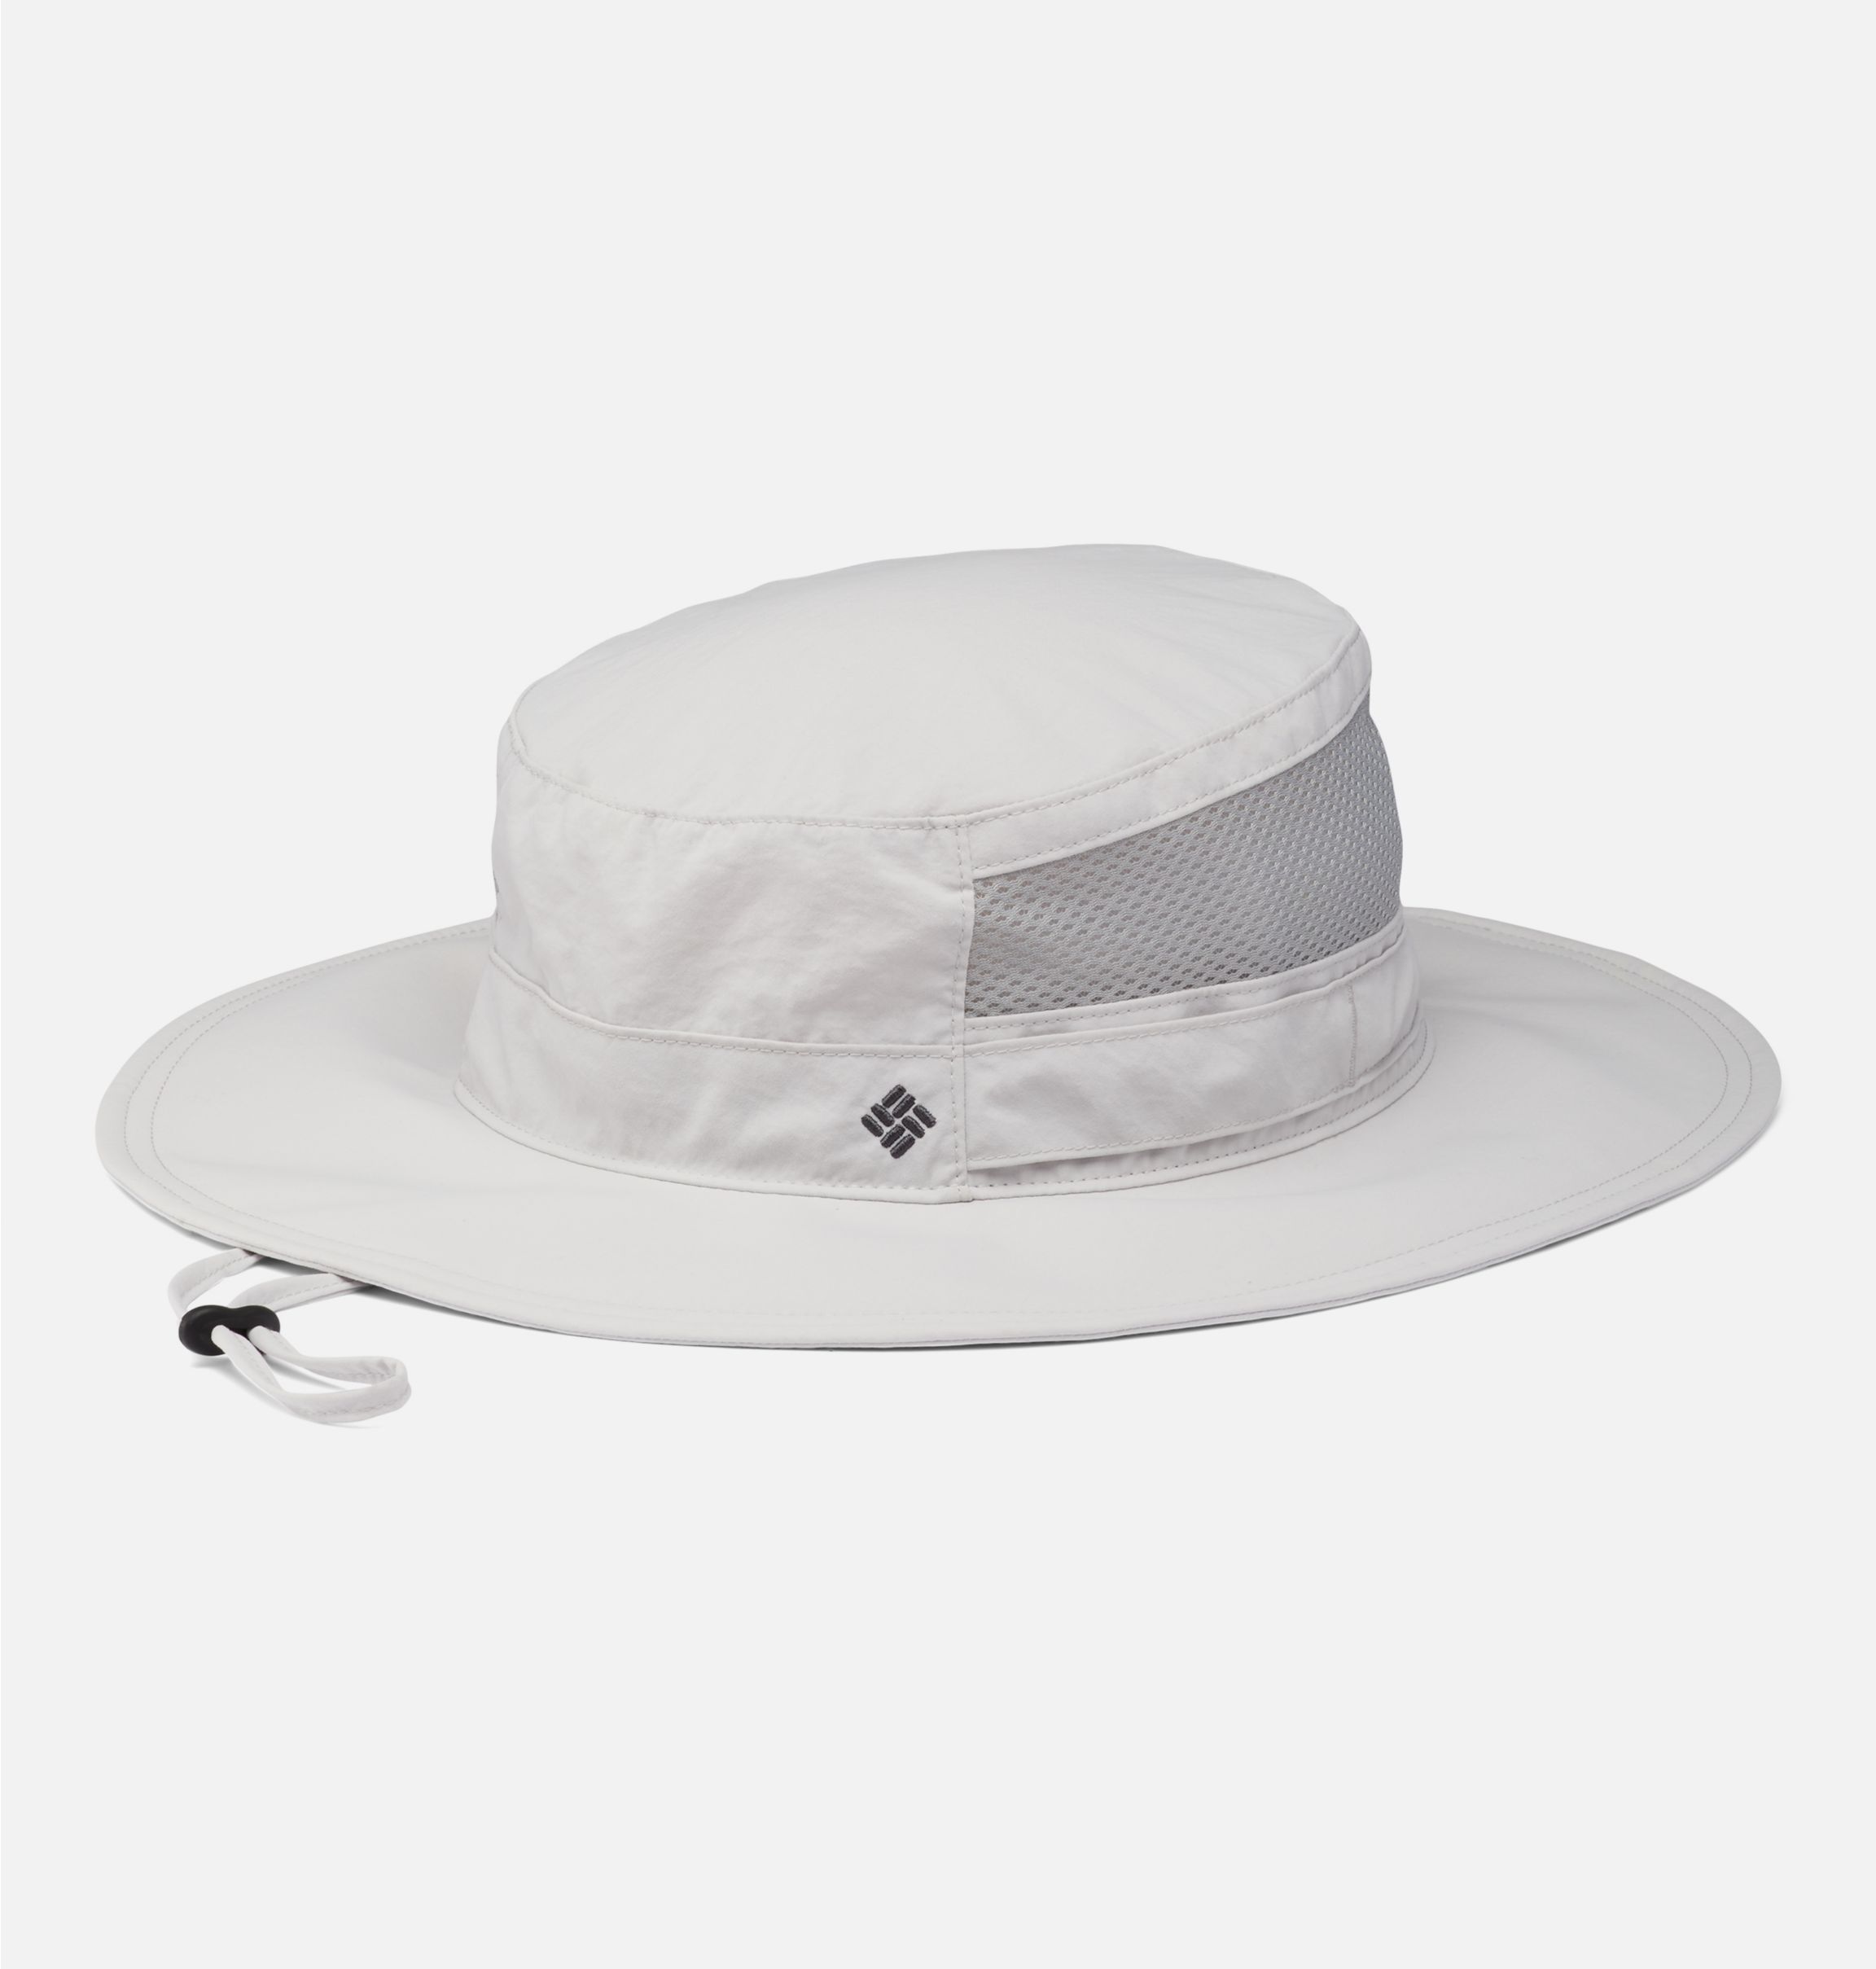 Columbia Adult Bora Bora II Booney Omni Shade Sun Hat